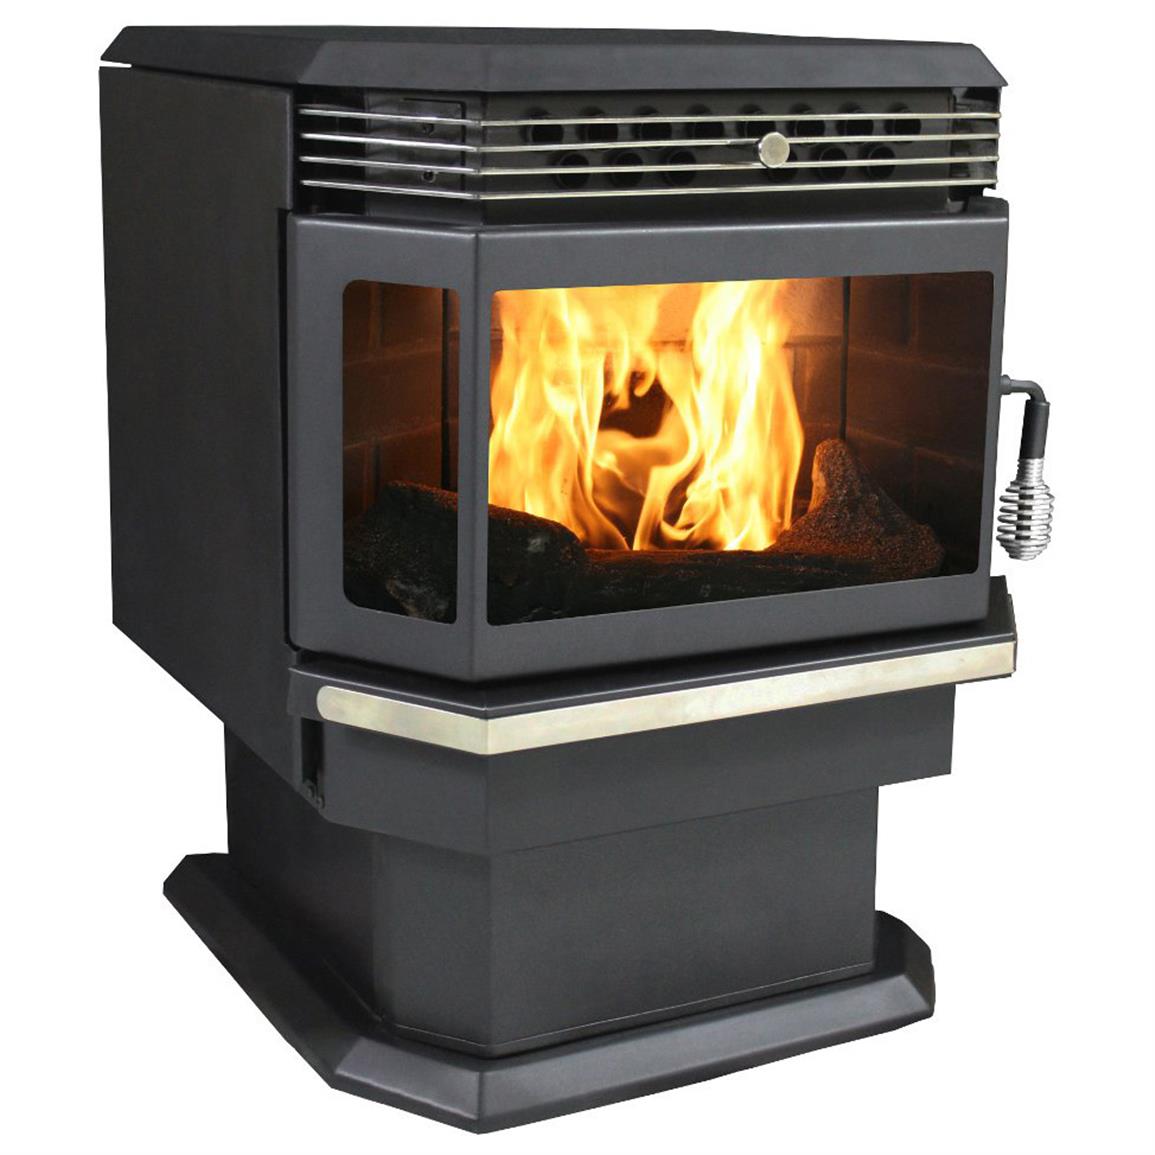 u.s. stove company bay front pellet stove - 588706, wood